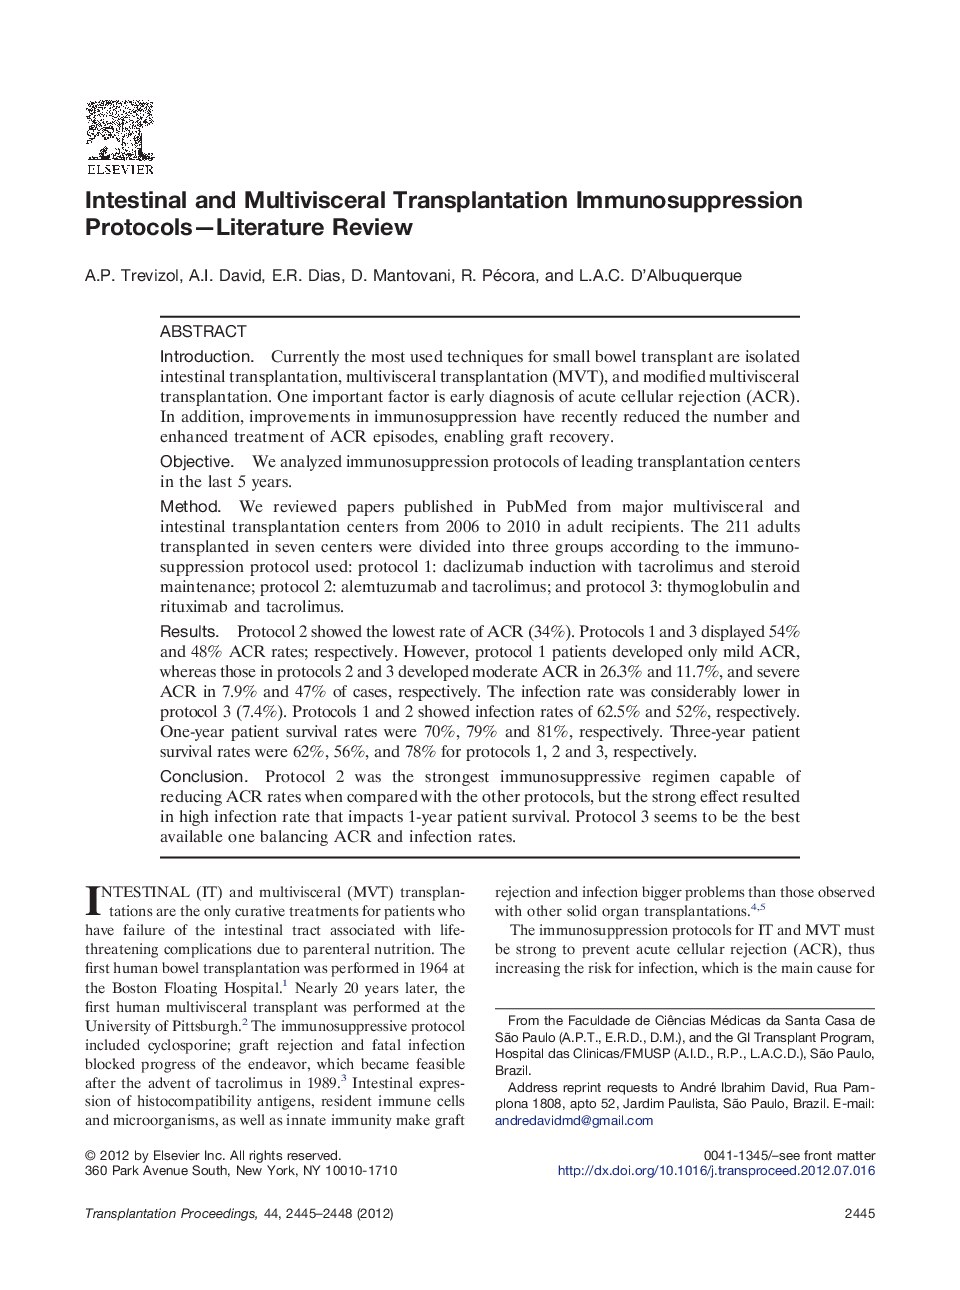 Liver, intestinal, and multivisceral transplantationOutcomesIntestinal and Multivisceral Transplantation Immunosuppression Protocols-Literature Review